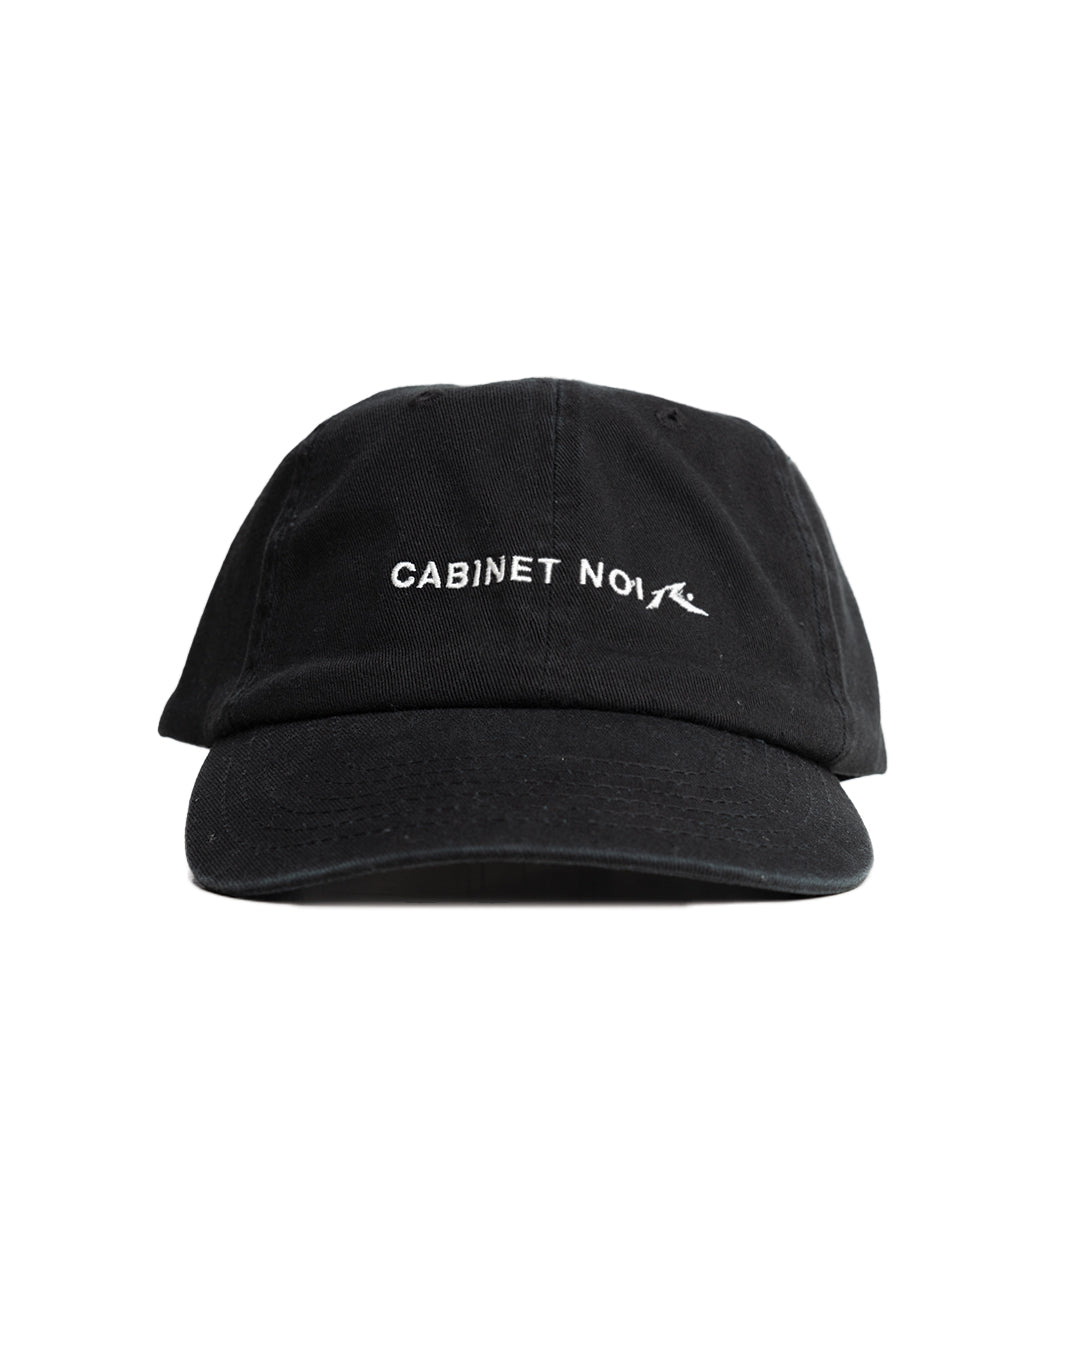 Cabinet Noir x Rusty Cap Black/White